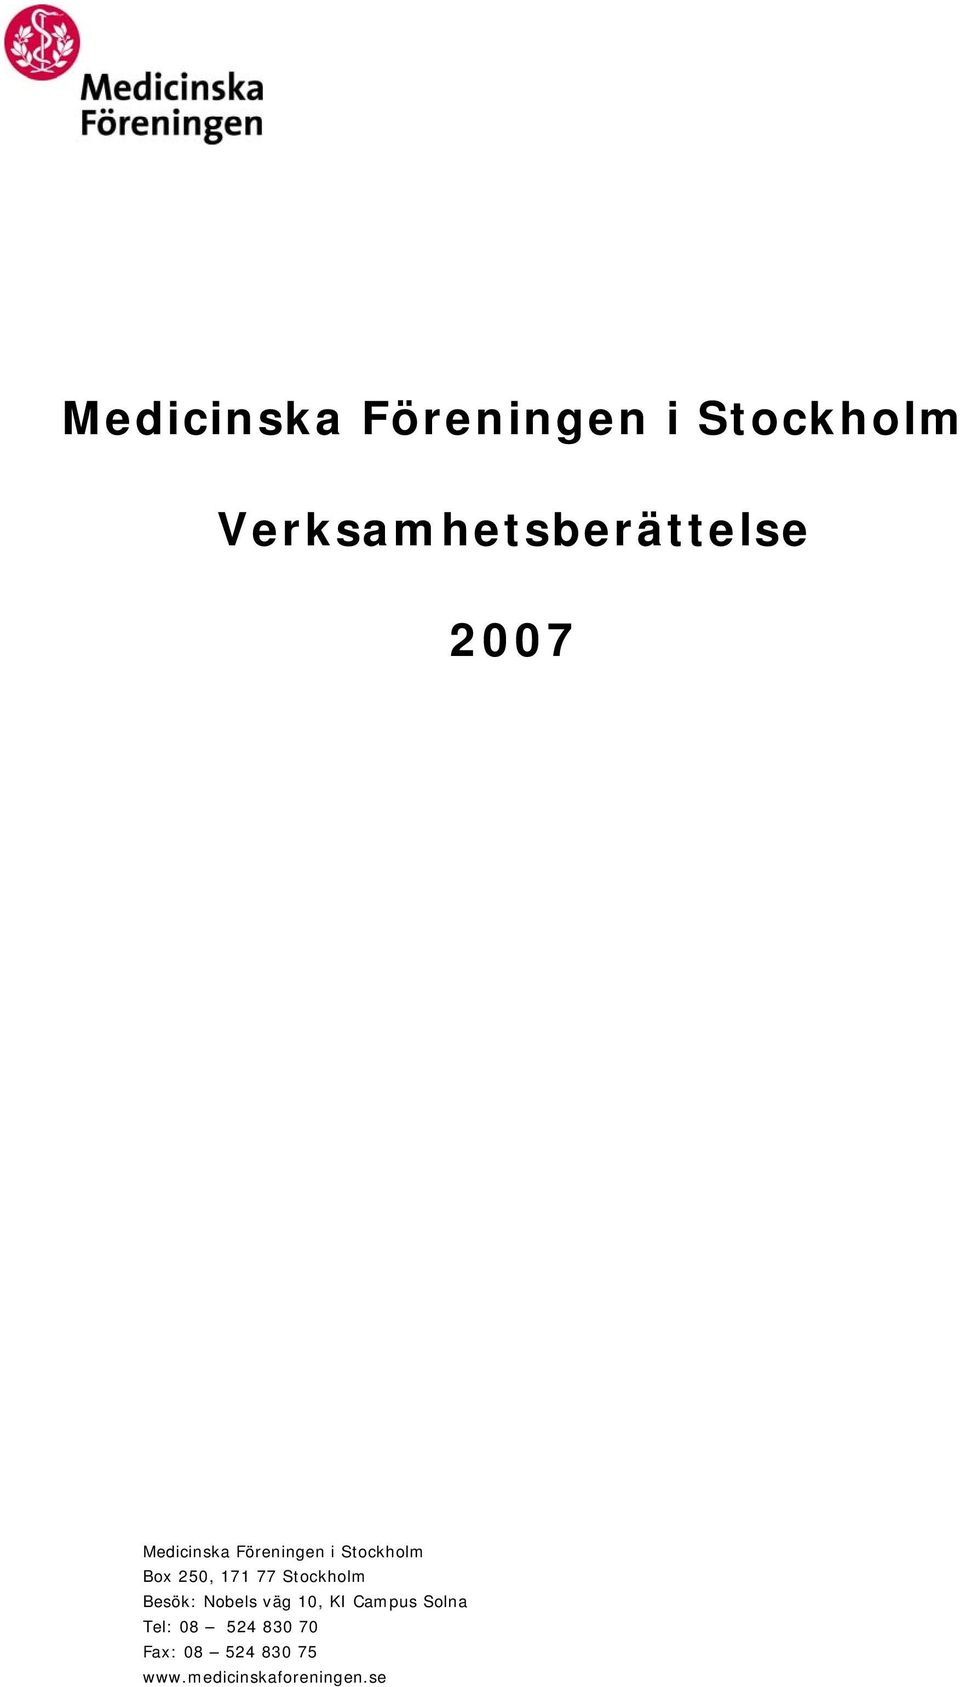 Stockholm Besök: Nobels väg 10, KI Campus Solna Tel: 08